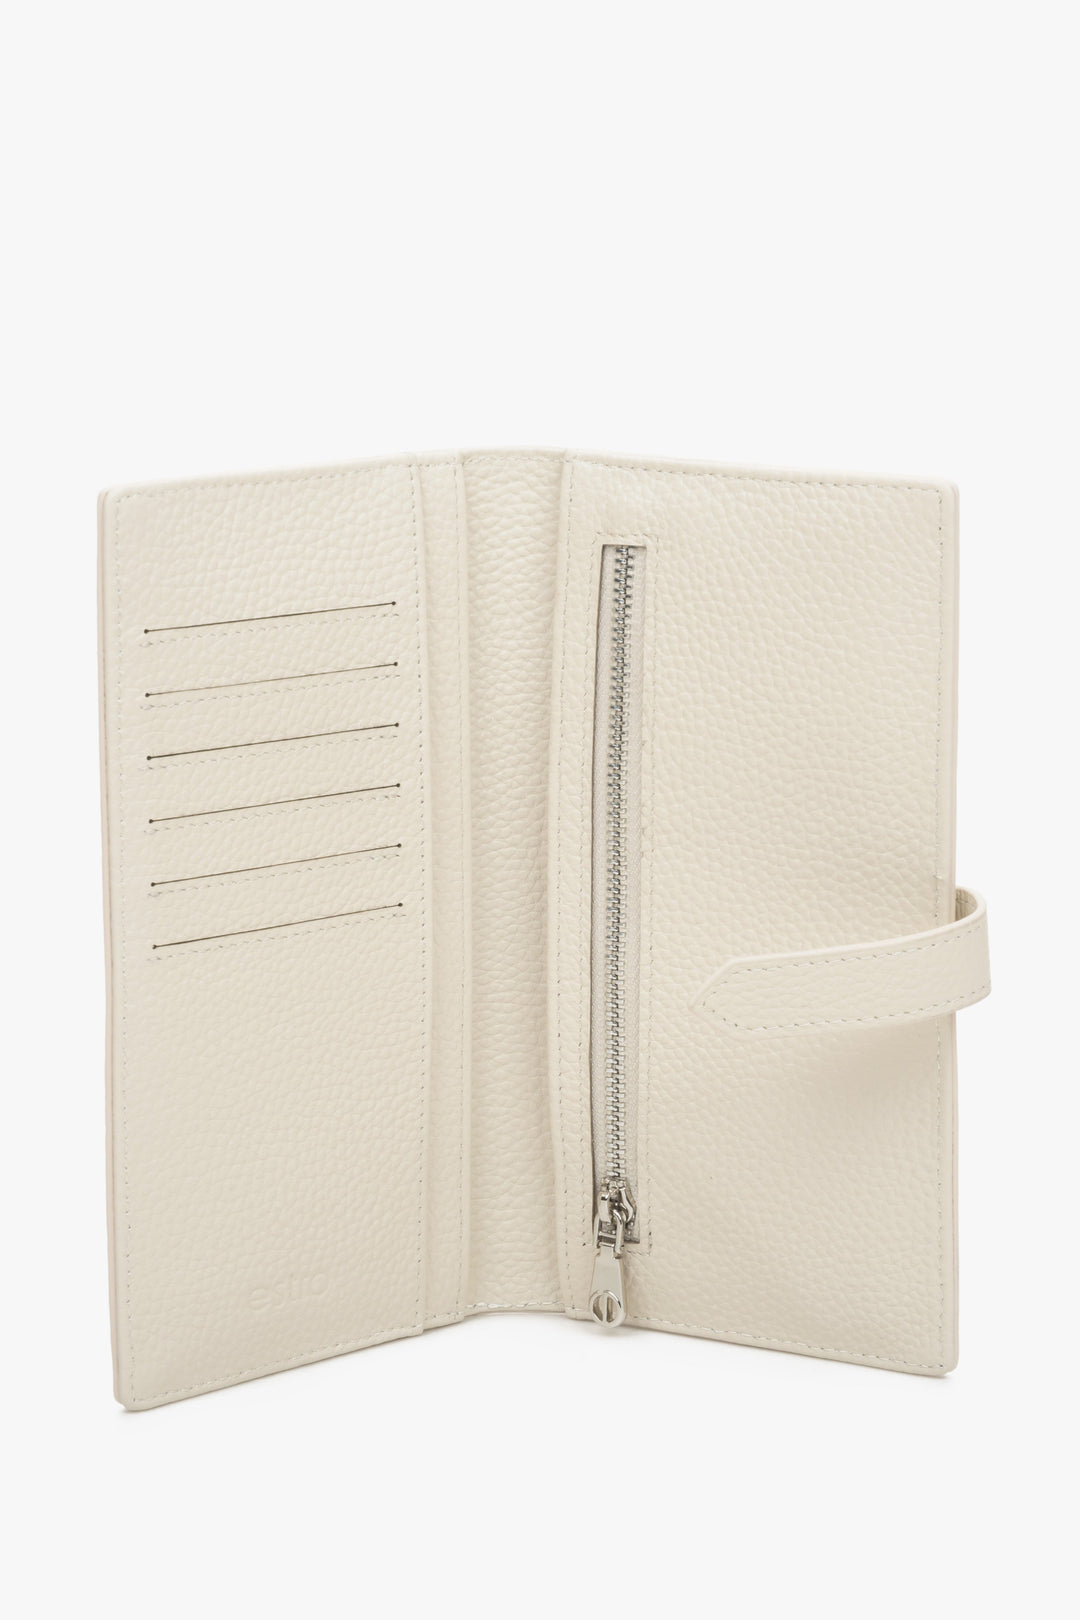 Large, light beige leather women's wallet by Estro - interior model.